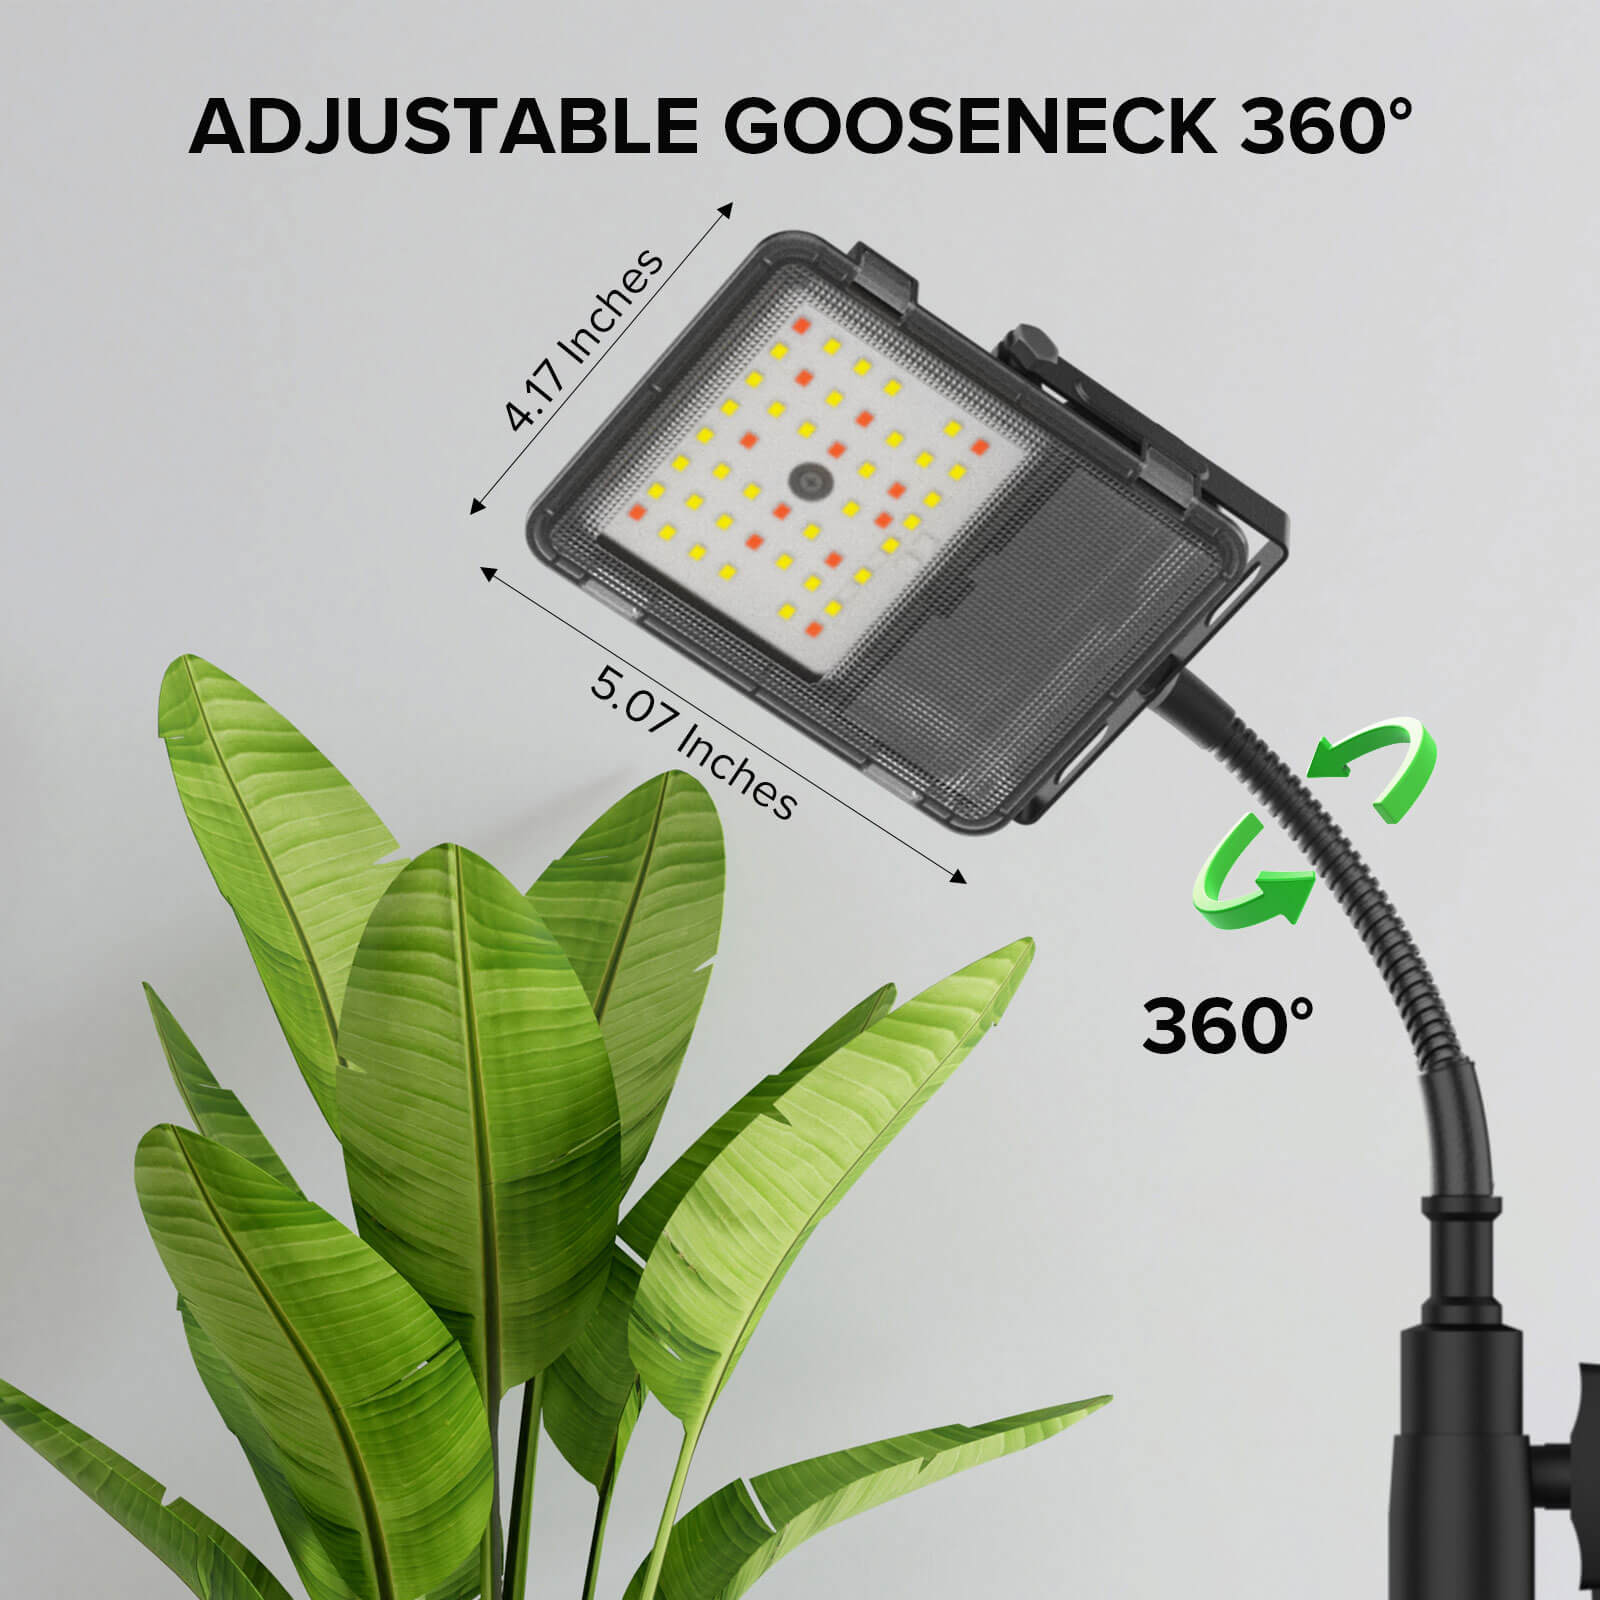 30W LED Grow Light With 360° Adjustable Gooseneck